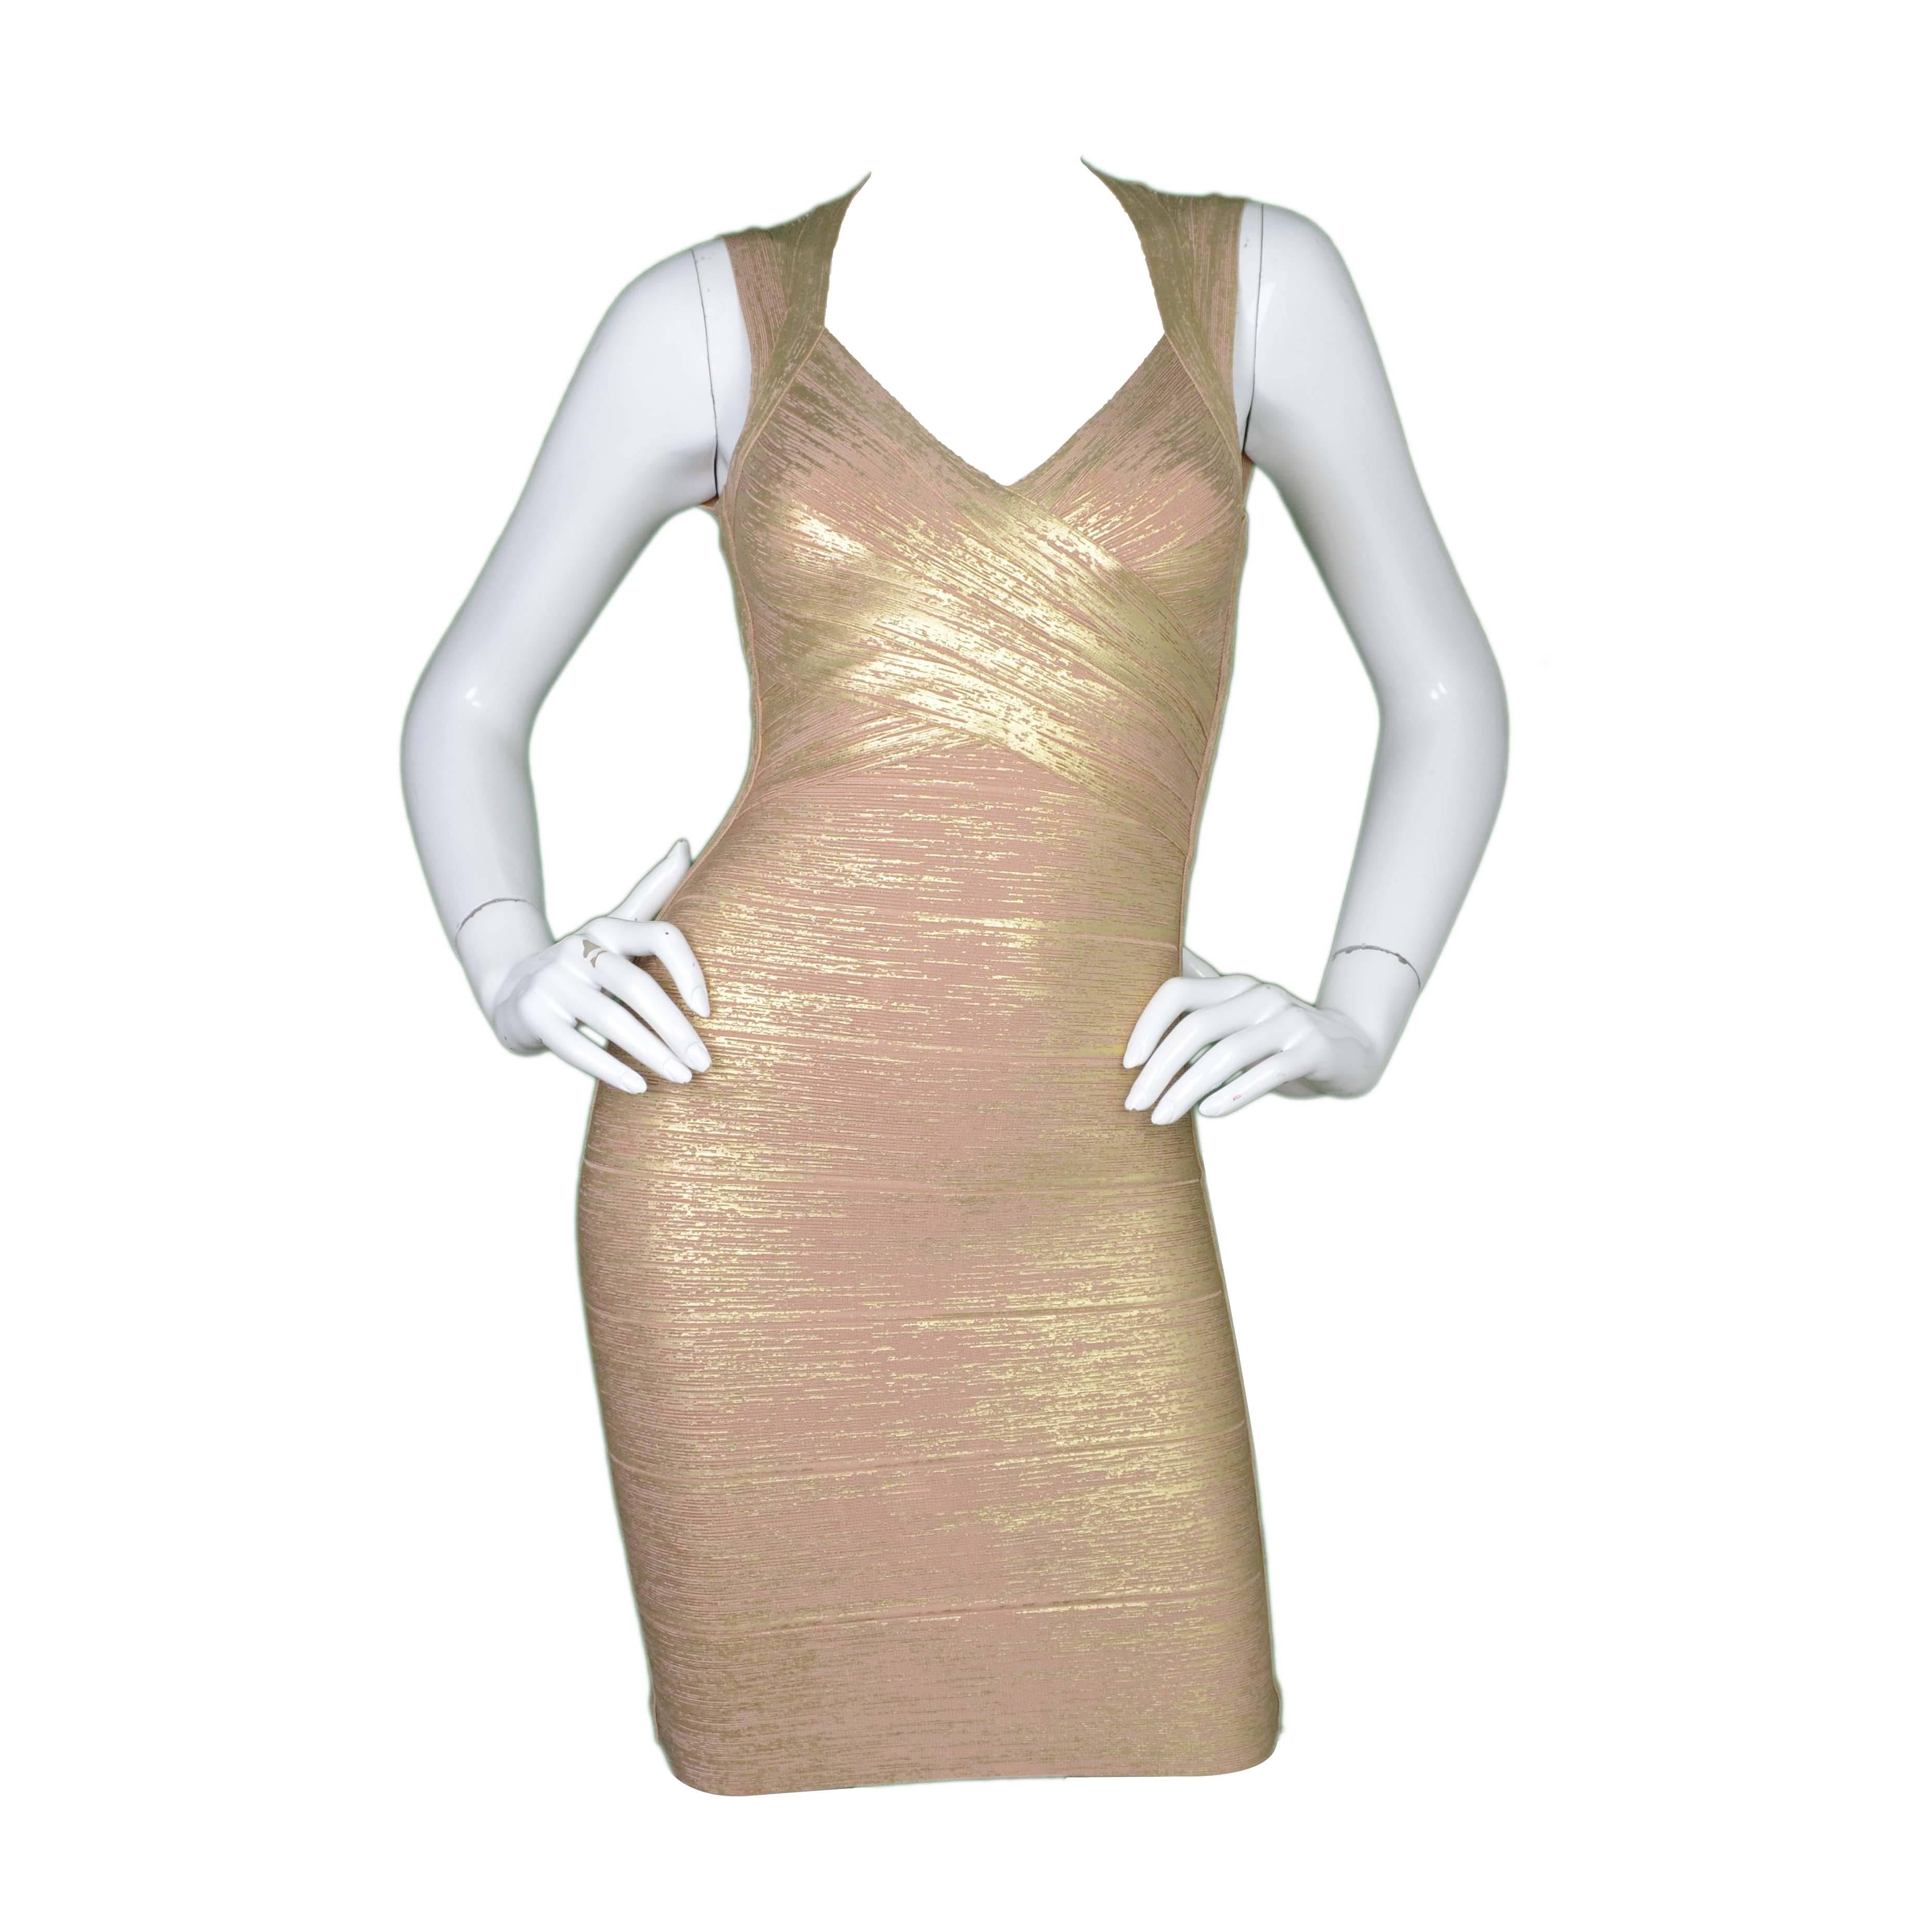 Herve Leger Champagne & Gold Painted Bandage Dress sz XXS